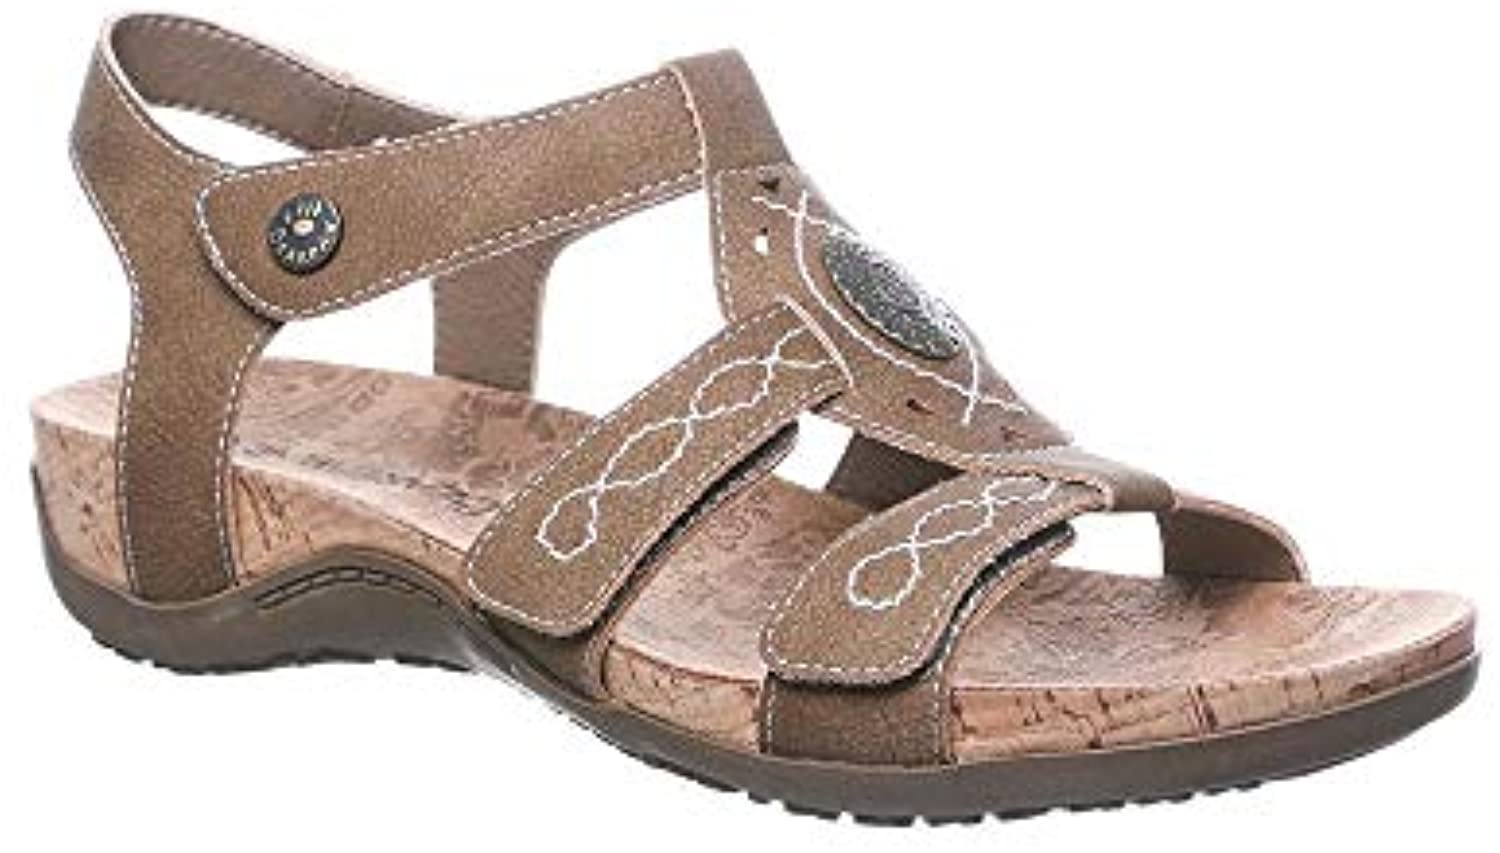 Bearpaw Ridley メーカー再生品 Ii Women's Comfort Sandals Medi サービス 2667w - 9 Brown